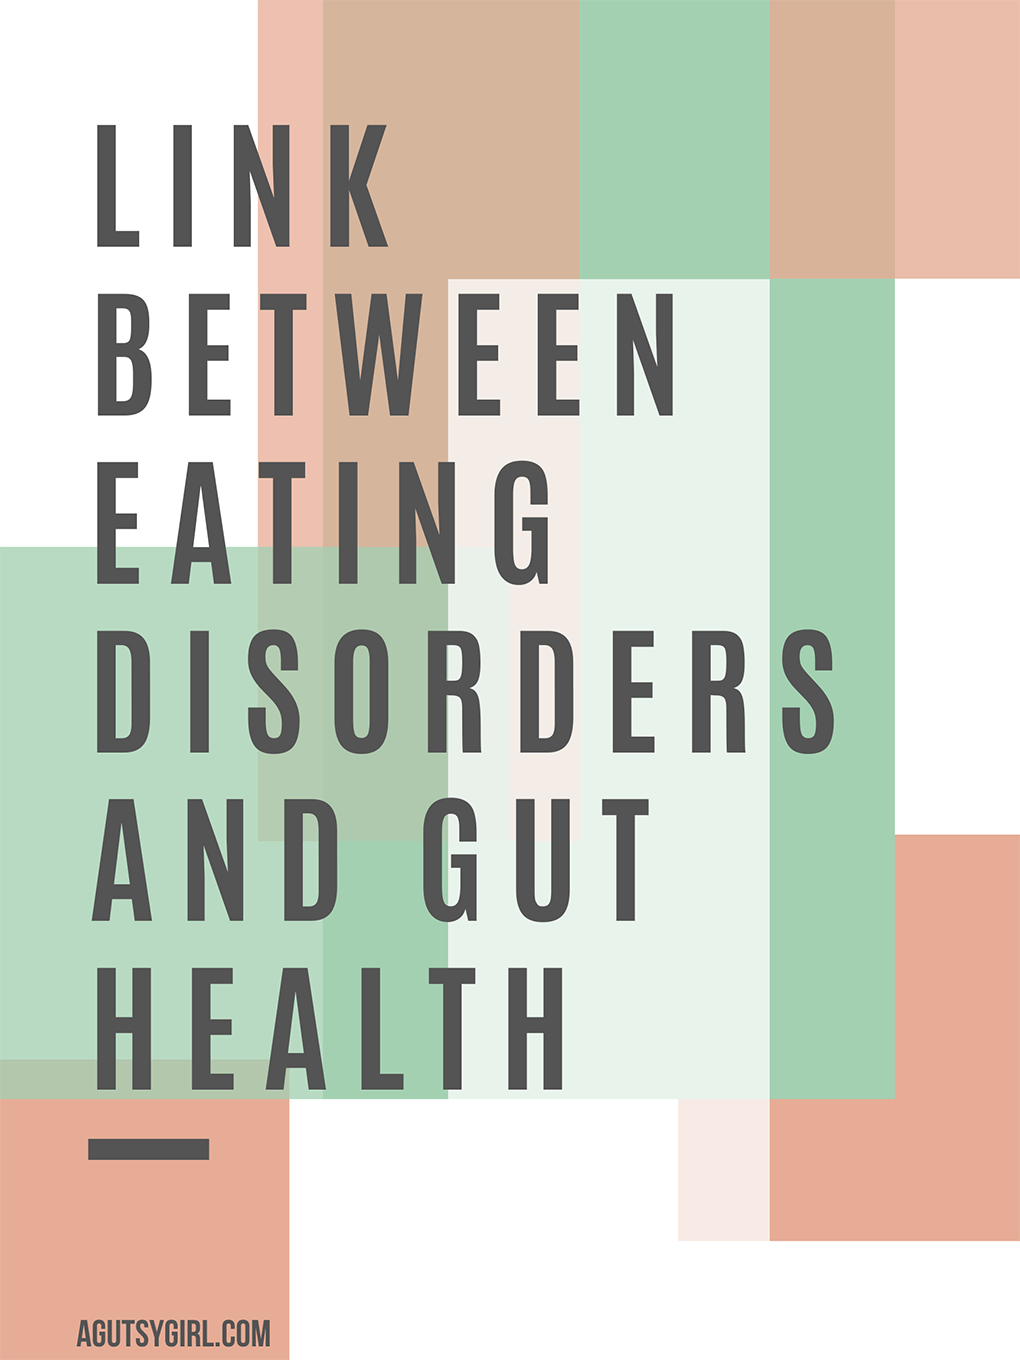 Link Between Eating Disorders and Gut Health agutsygirl.com #guthealth #neda #eatingdisorders